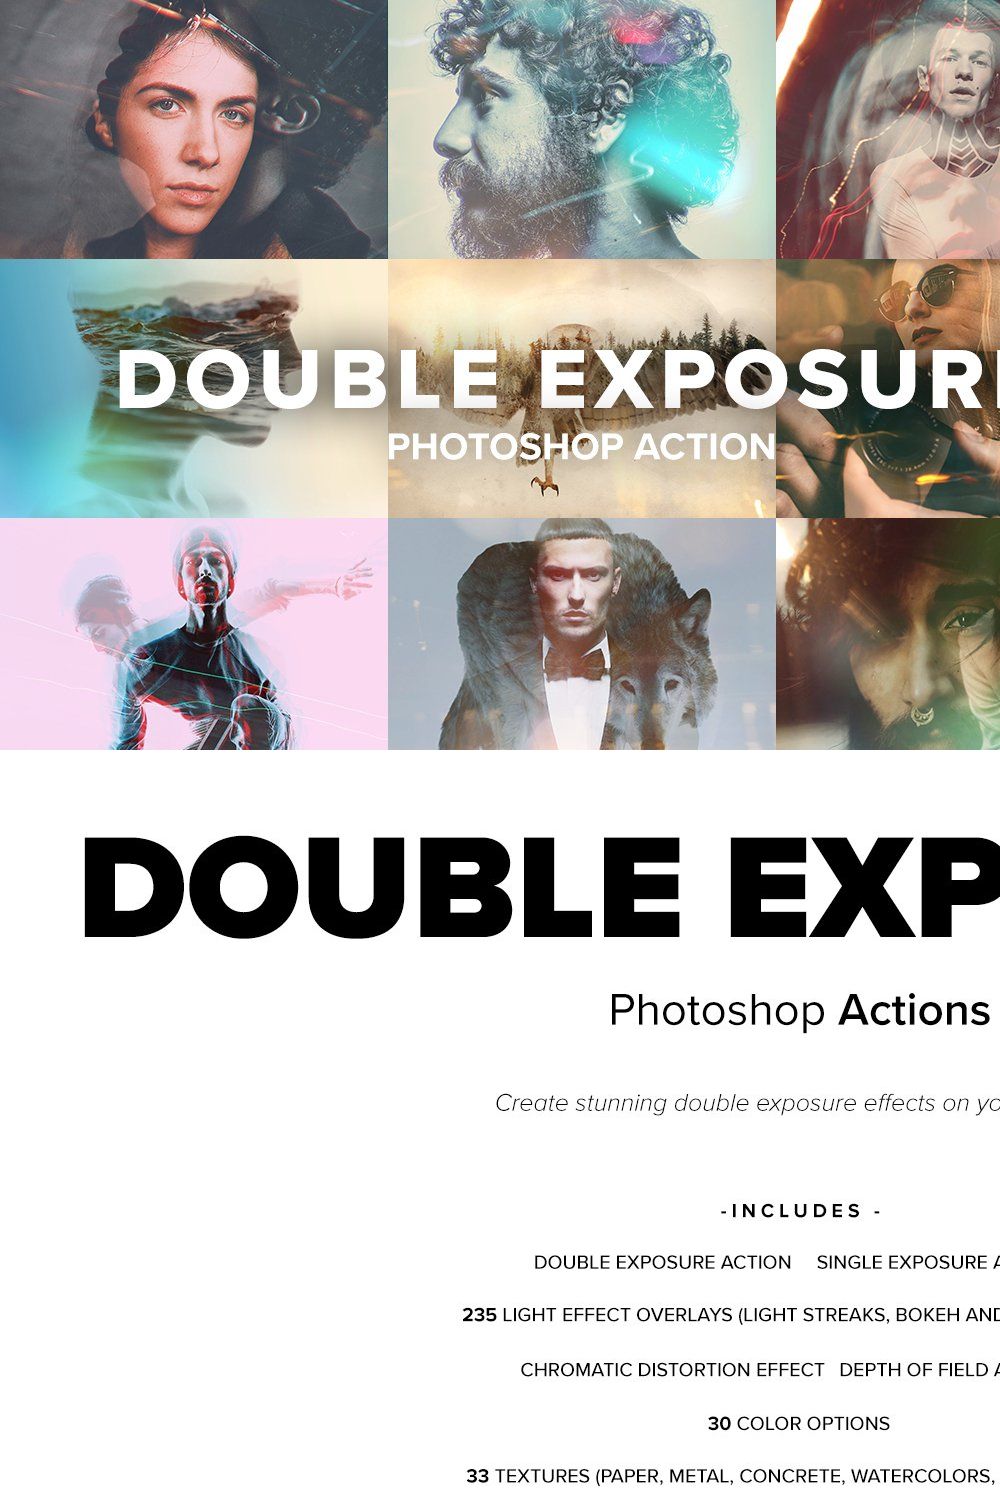 Double Exposure Photoshop Action pinterest preview image.